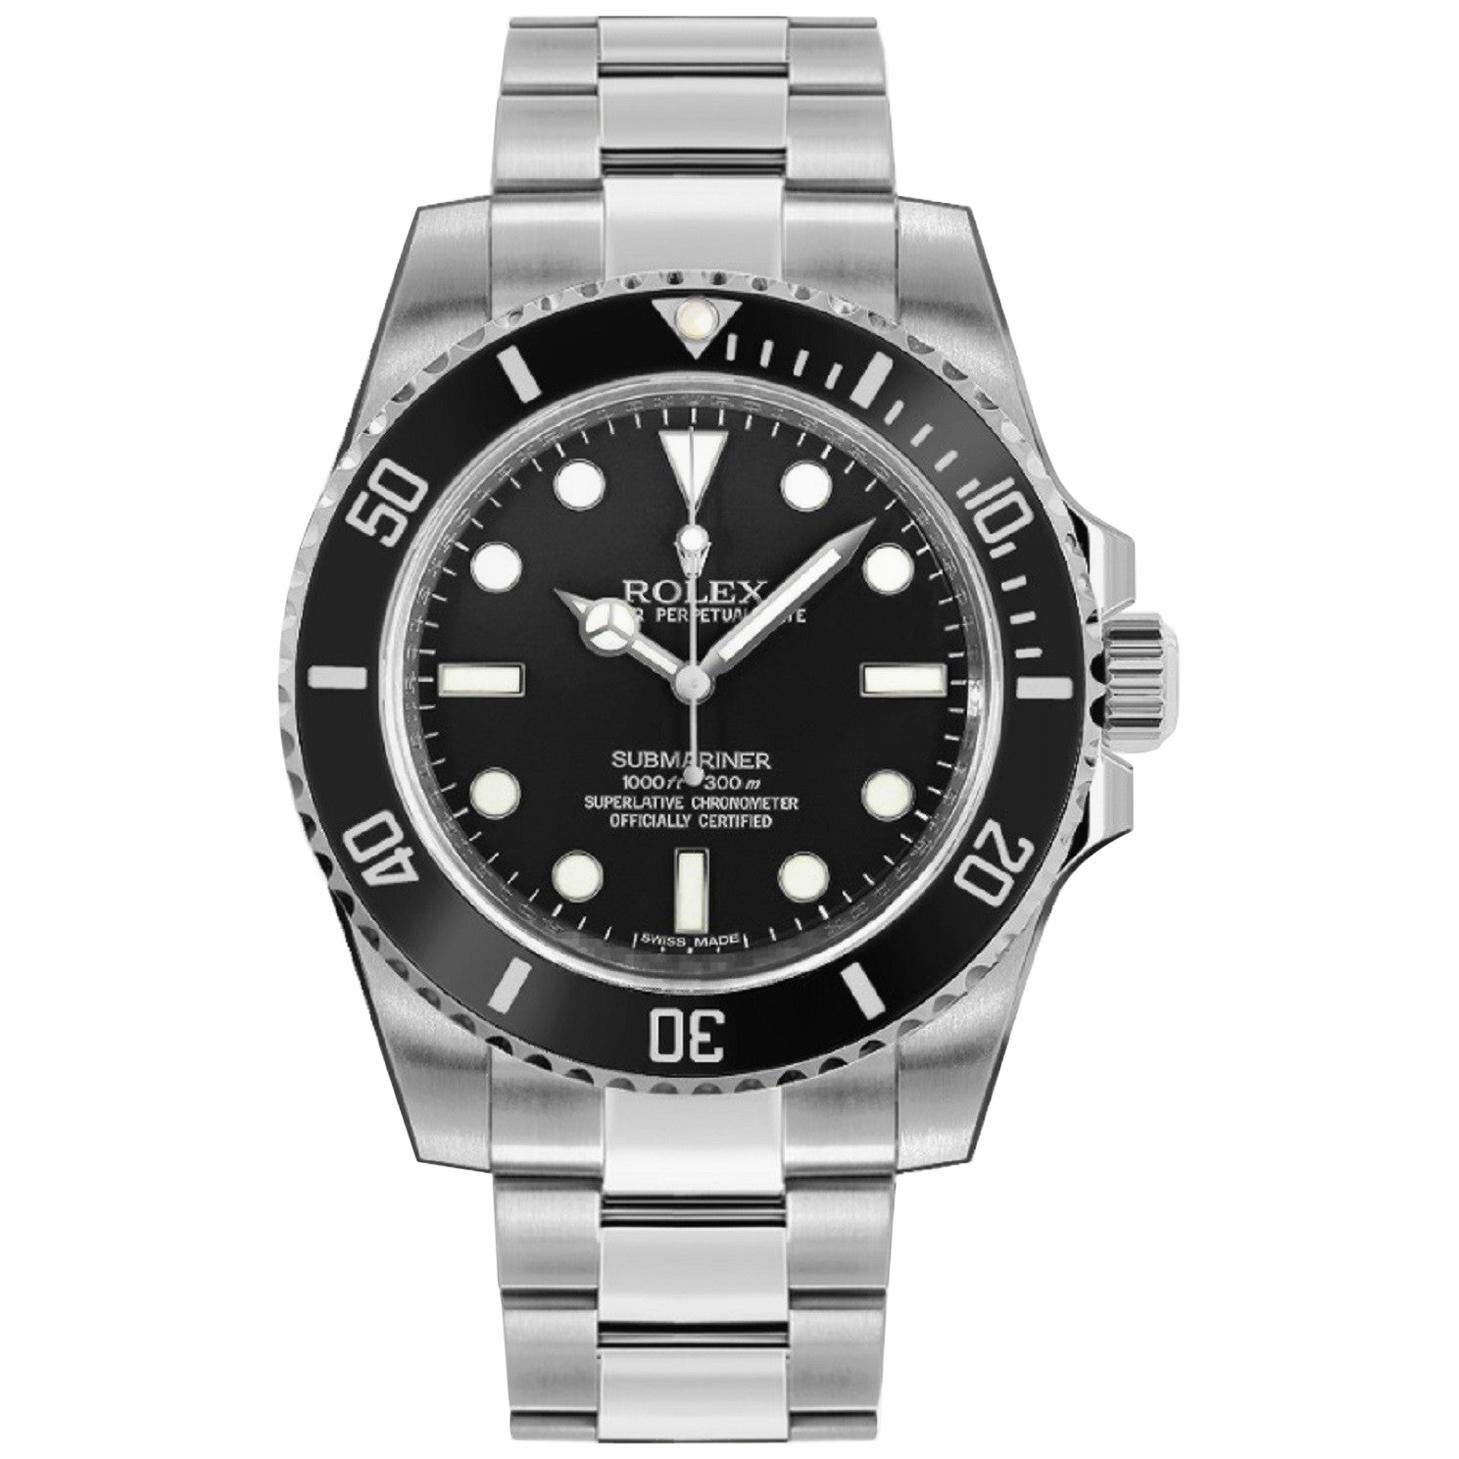 Rolex Submariner 114060 Ceramic New Condition Automatic Men's Watch